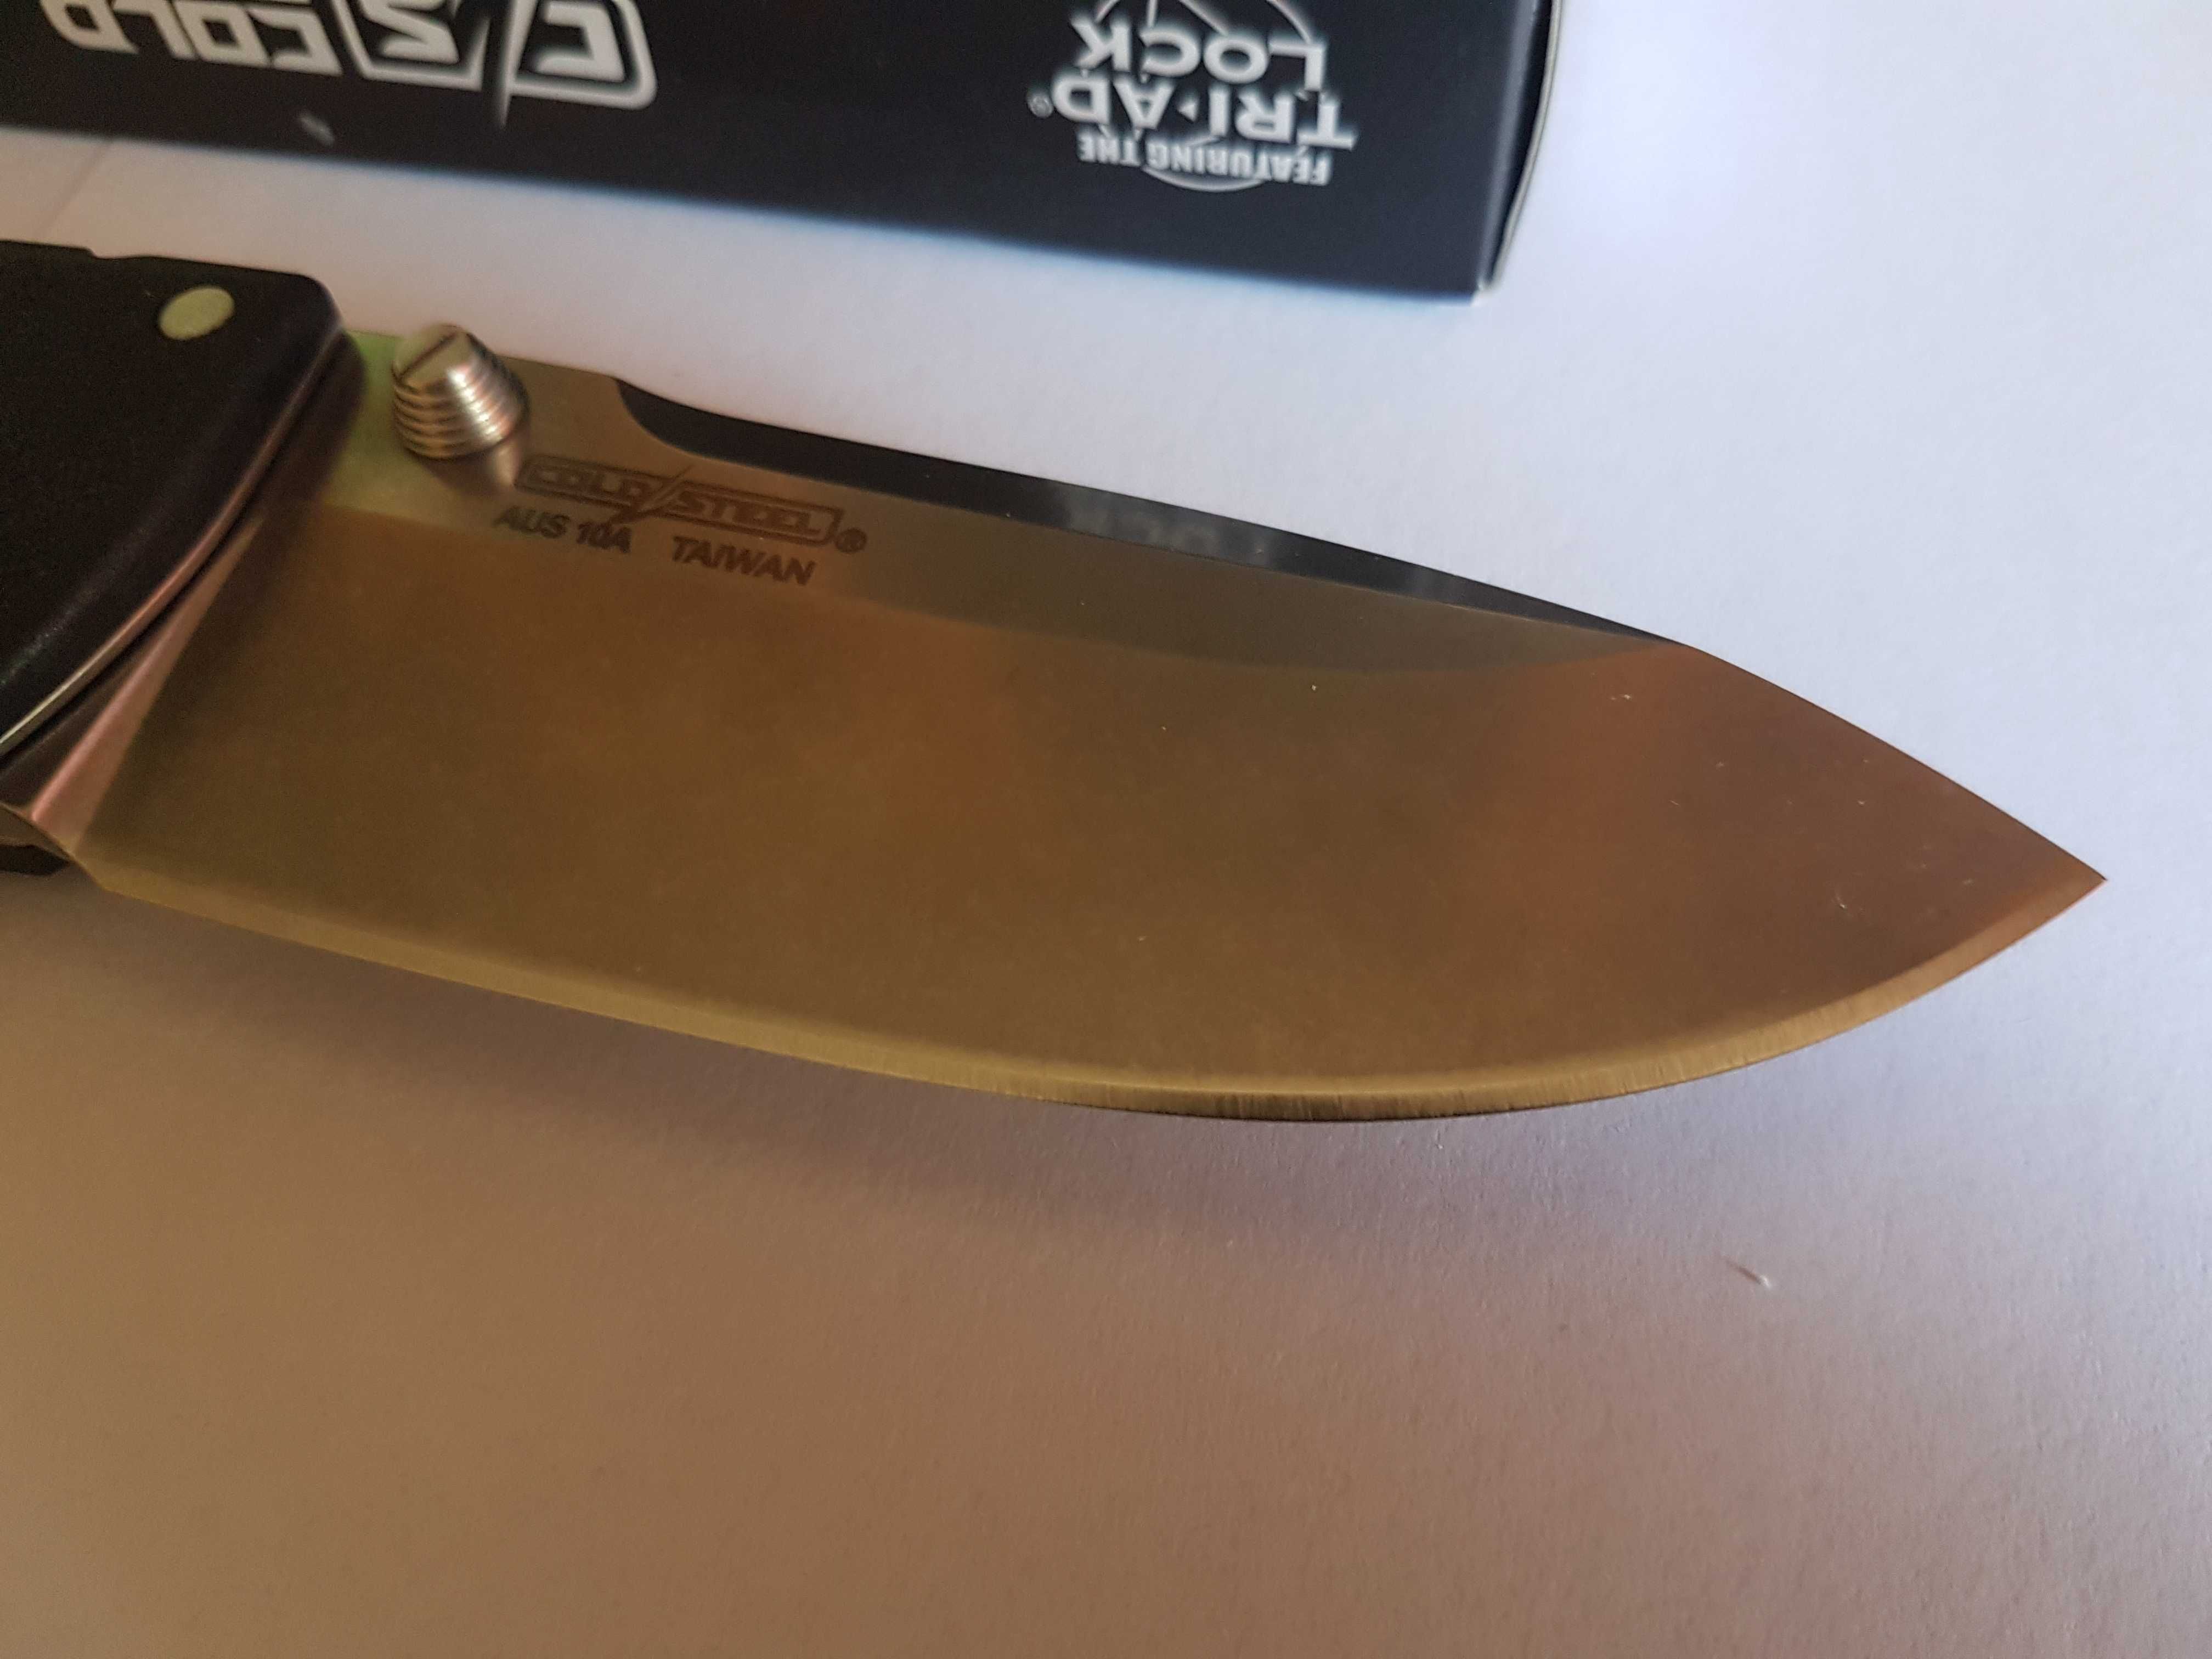 Nóż Cold Steel 4 Max Scout